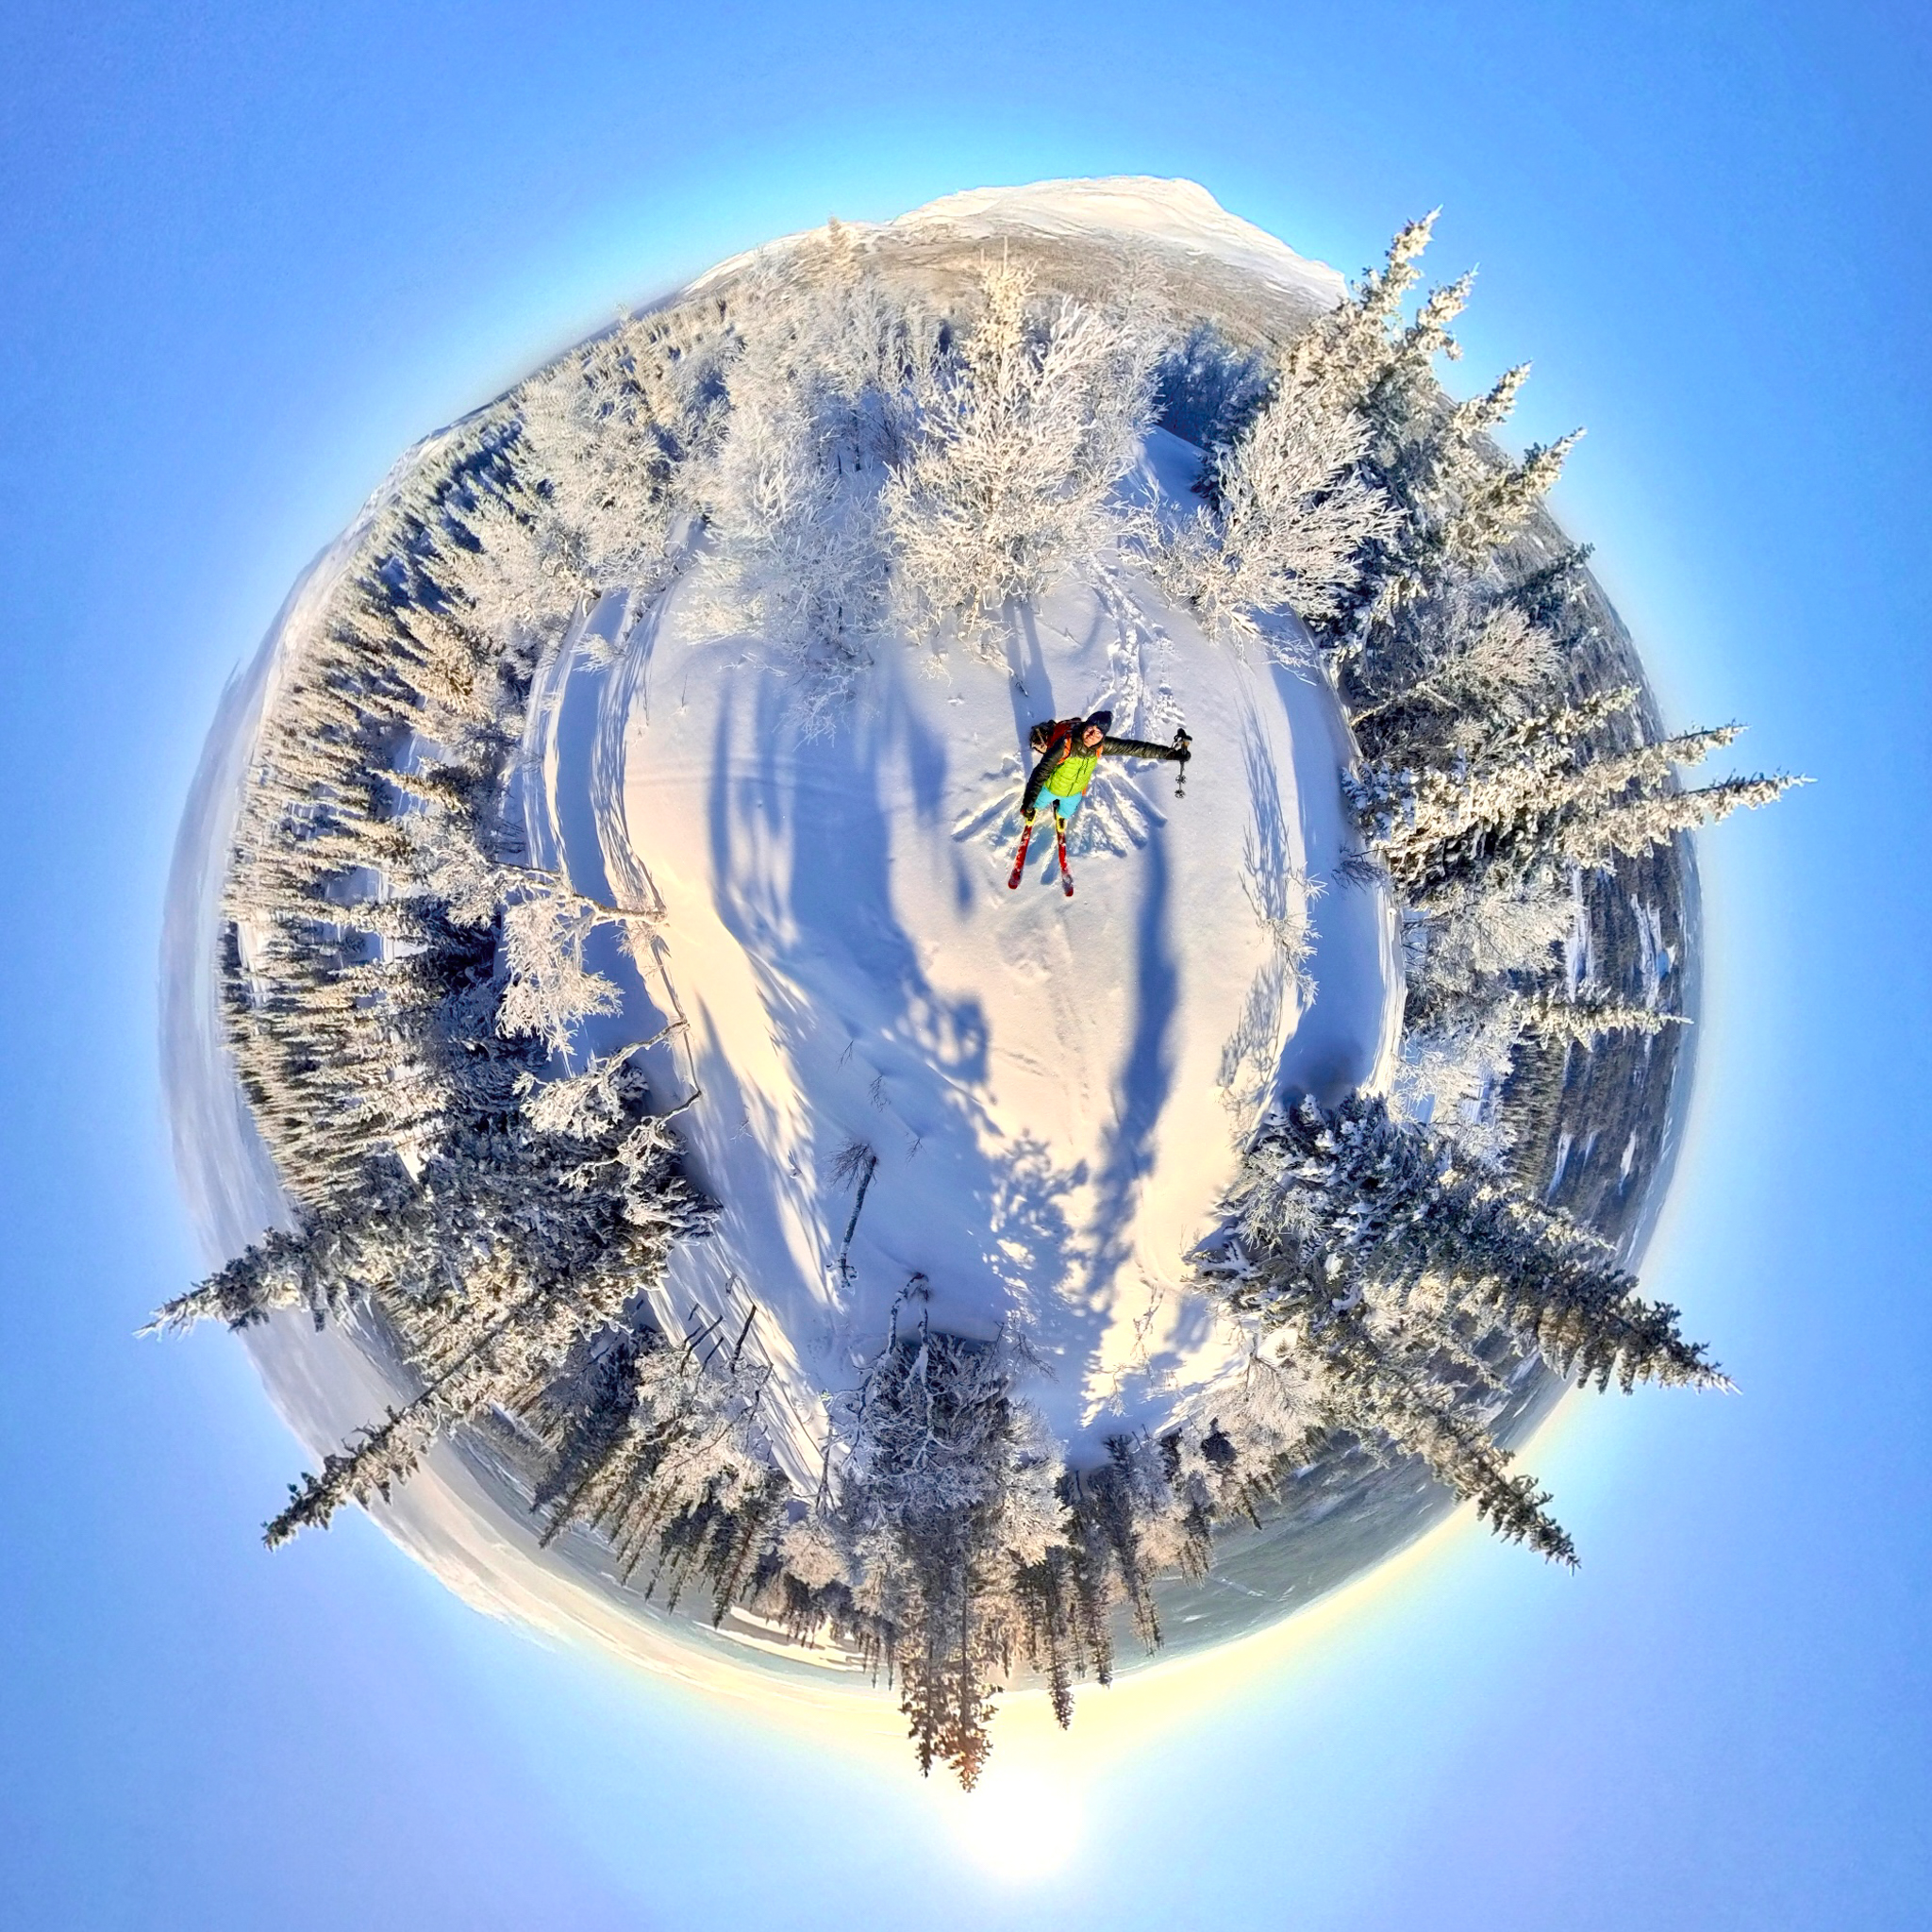 360 Selfie from the top of Förberget